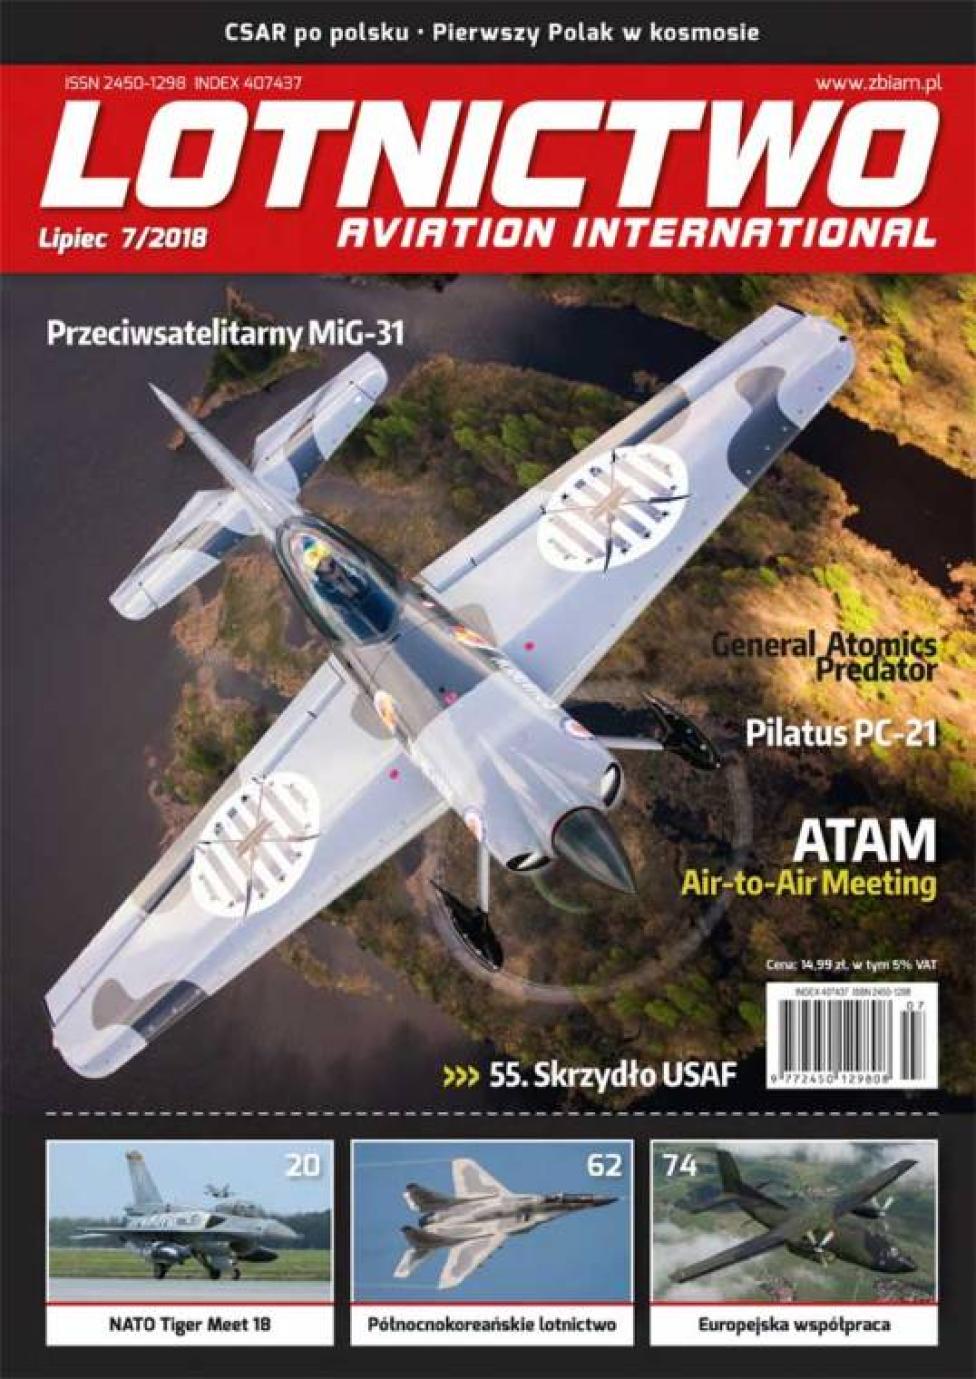 Lotnictwo Aviation International 7/2018